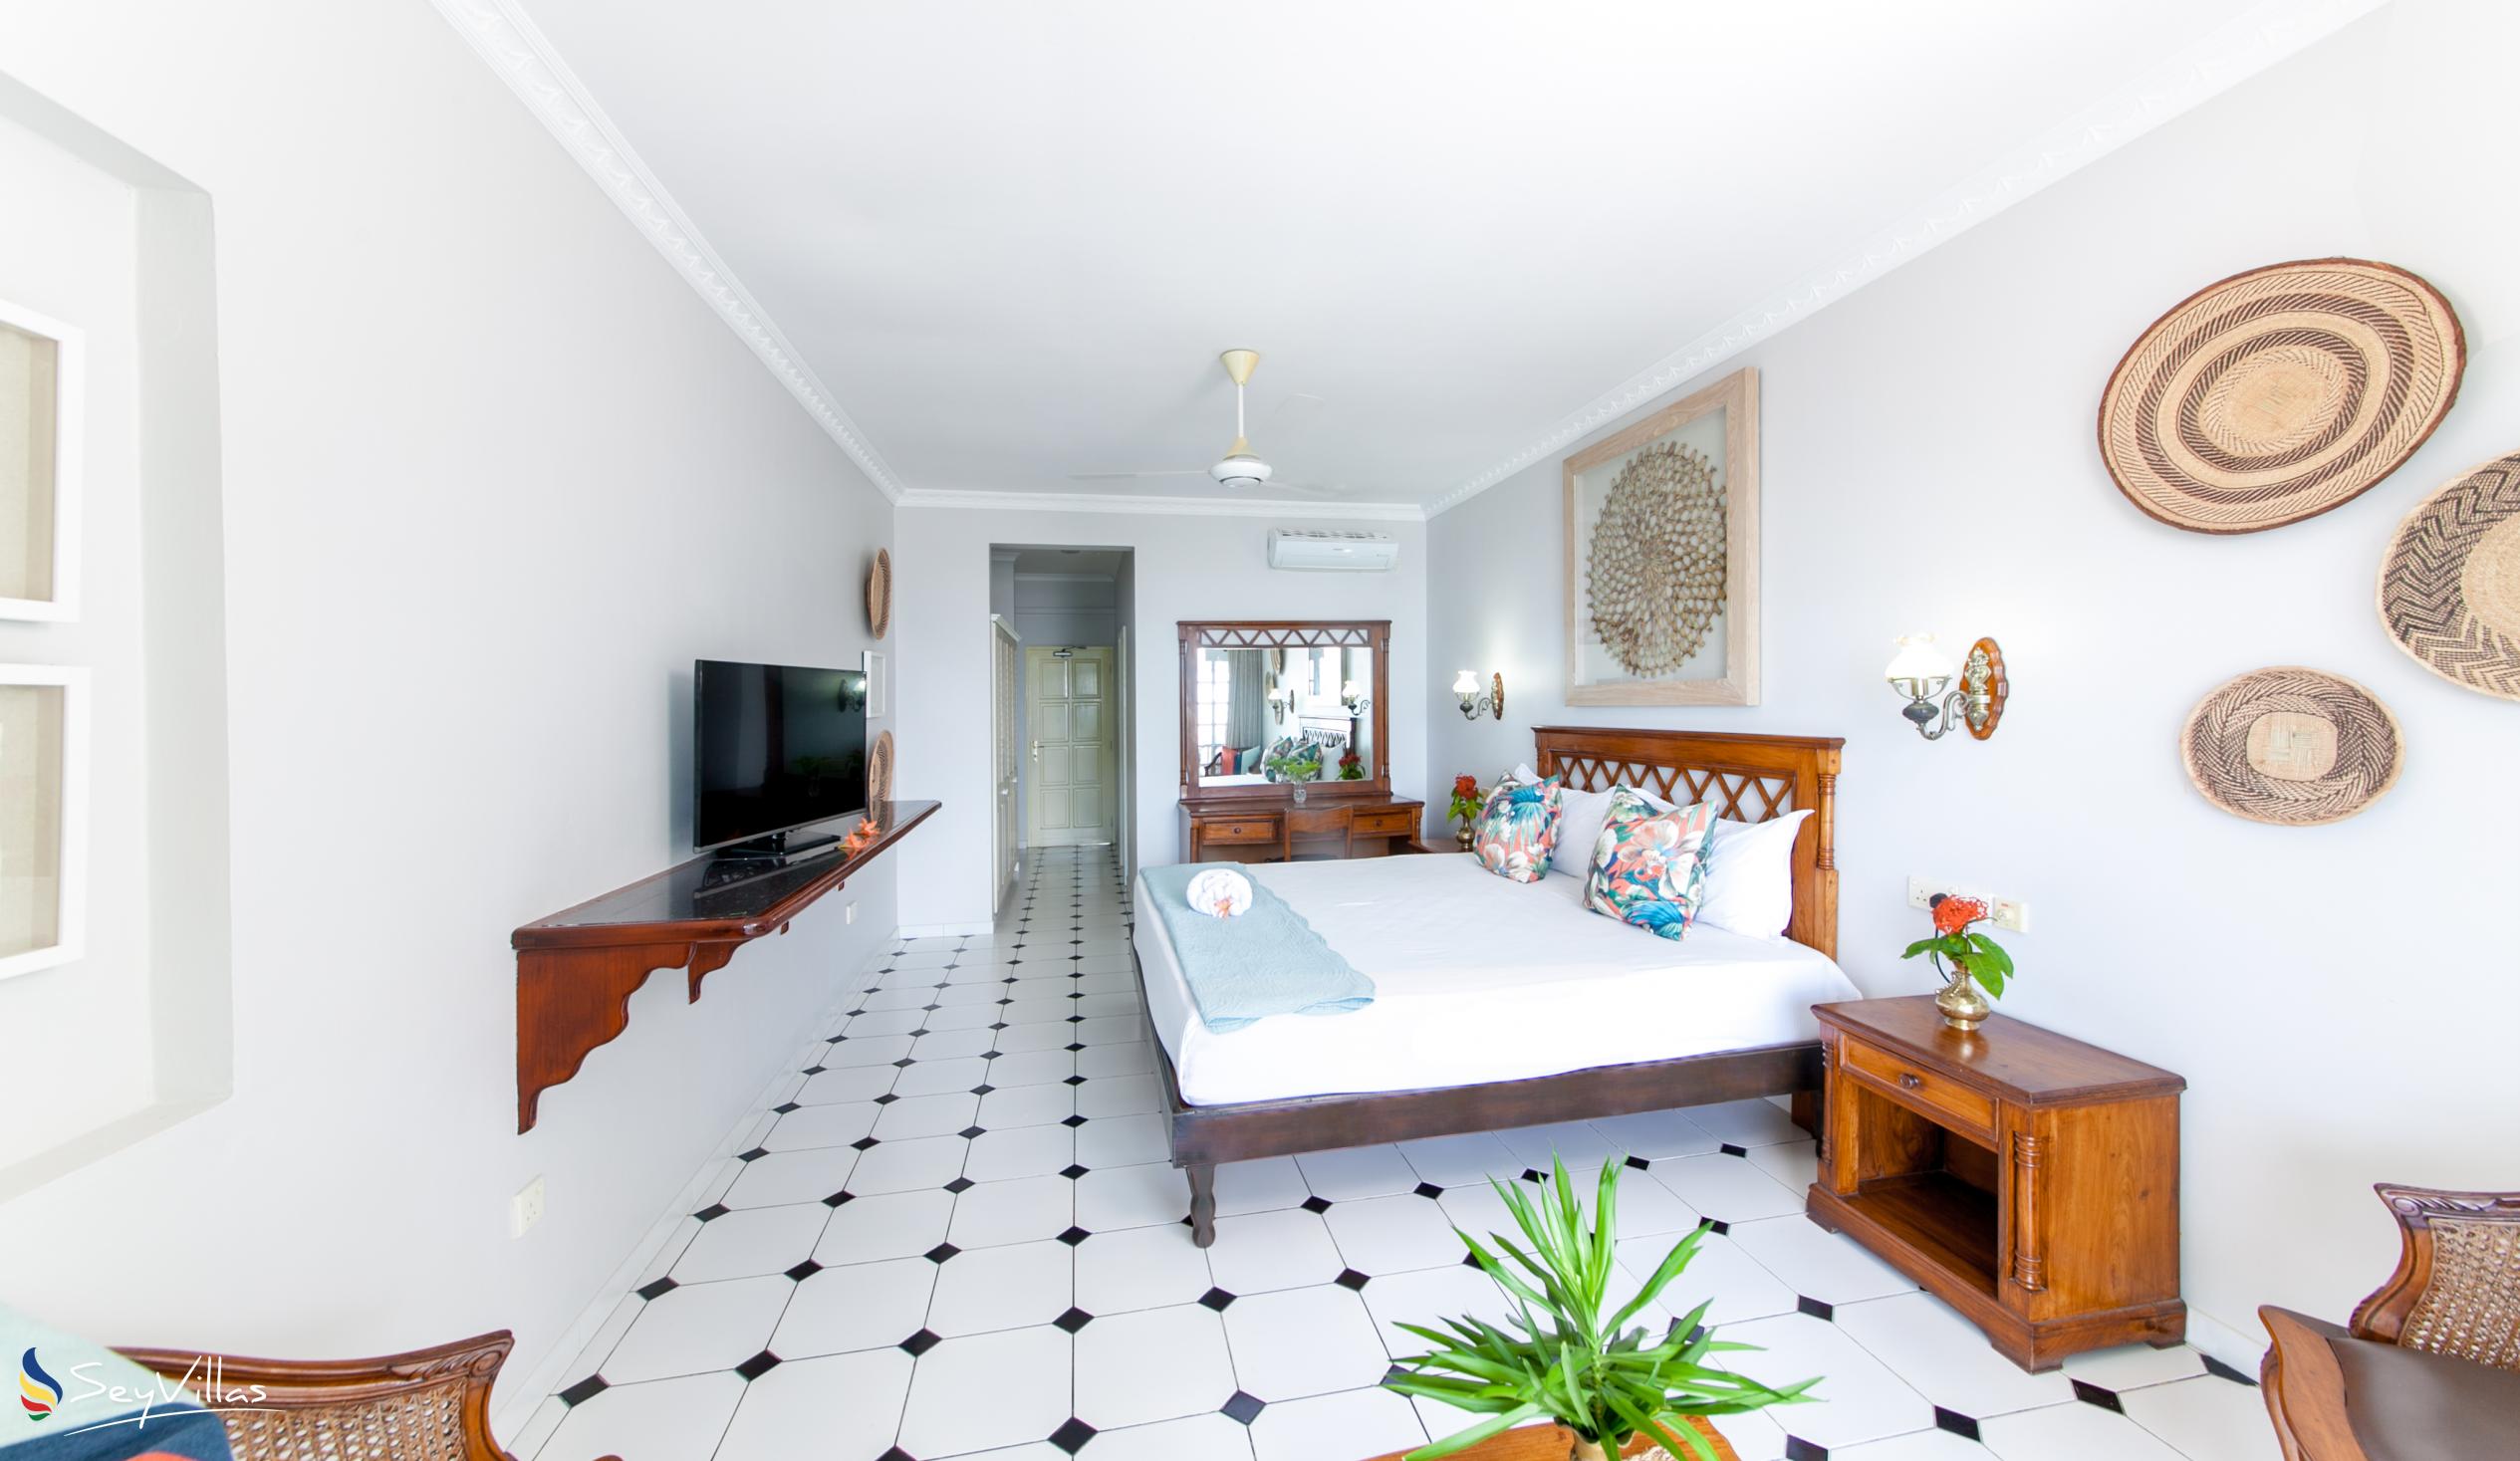 Photo 45: Palm Beach Hotel - Deluxe Room - Praslin (Seychelles)